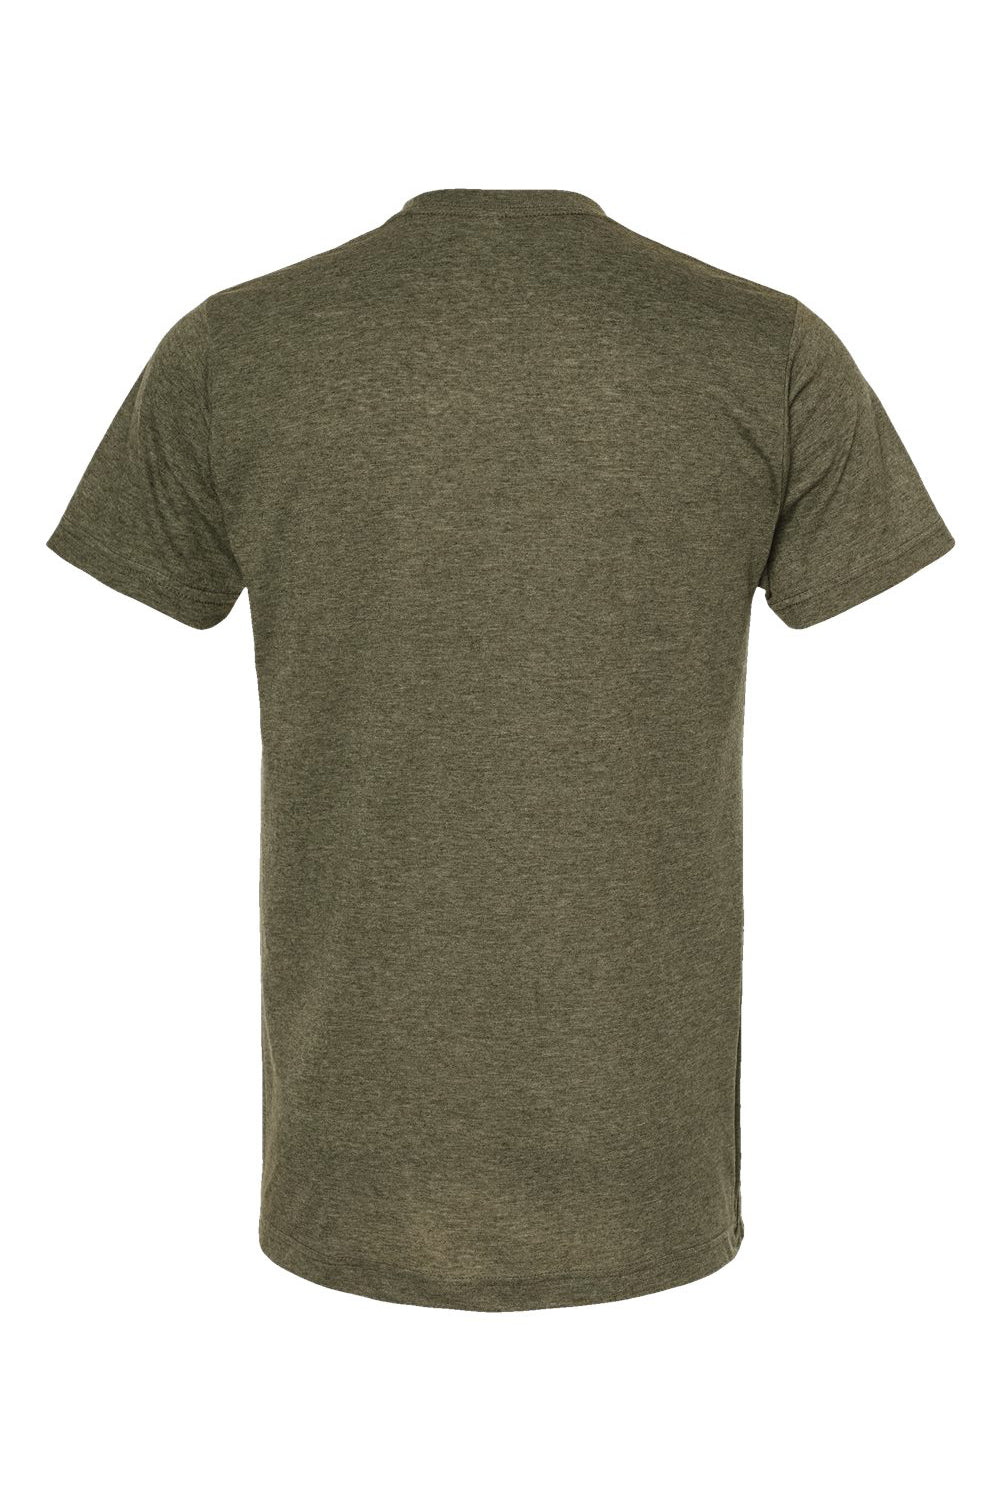 Tultex 241 Mens Poly-Rich Short Sleeve Crewneck T-Shirt Heather Military Green Flat Back